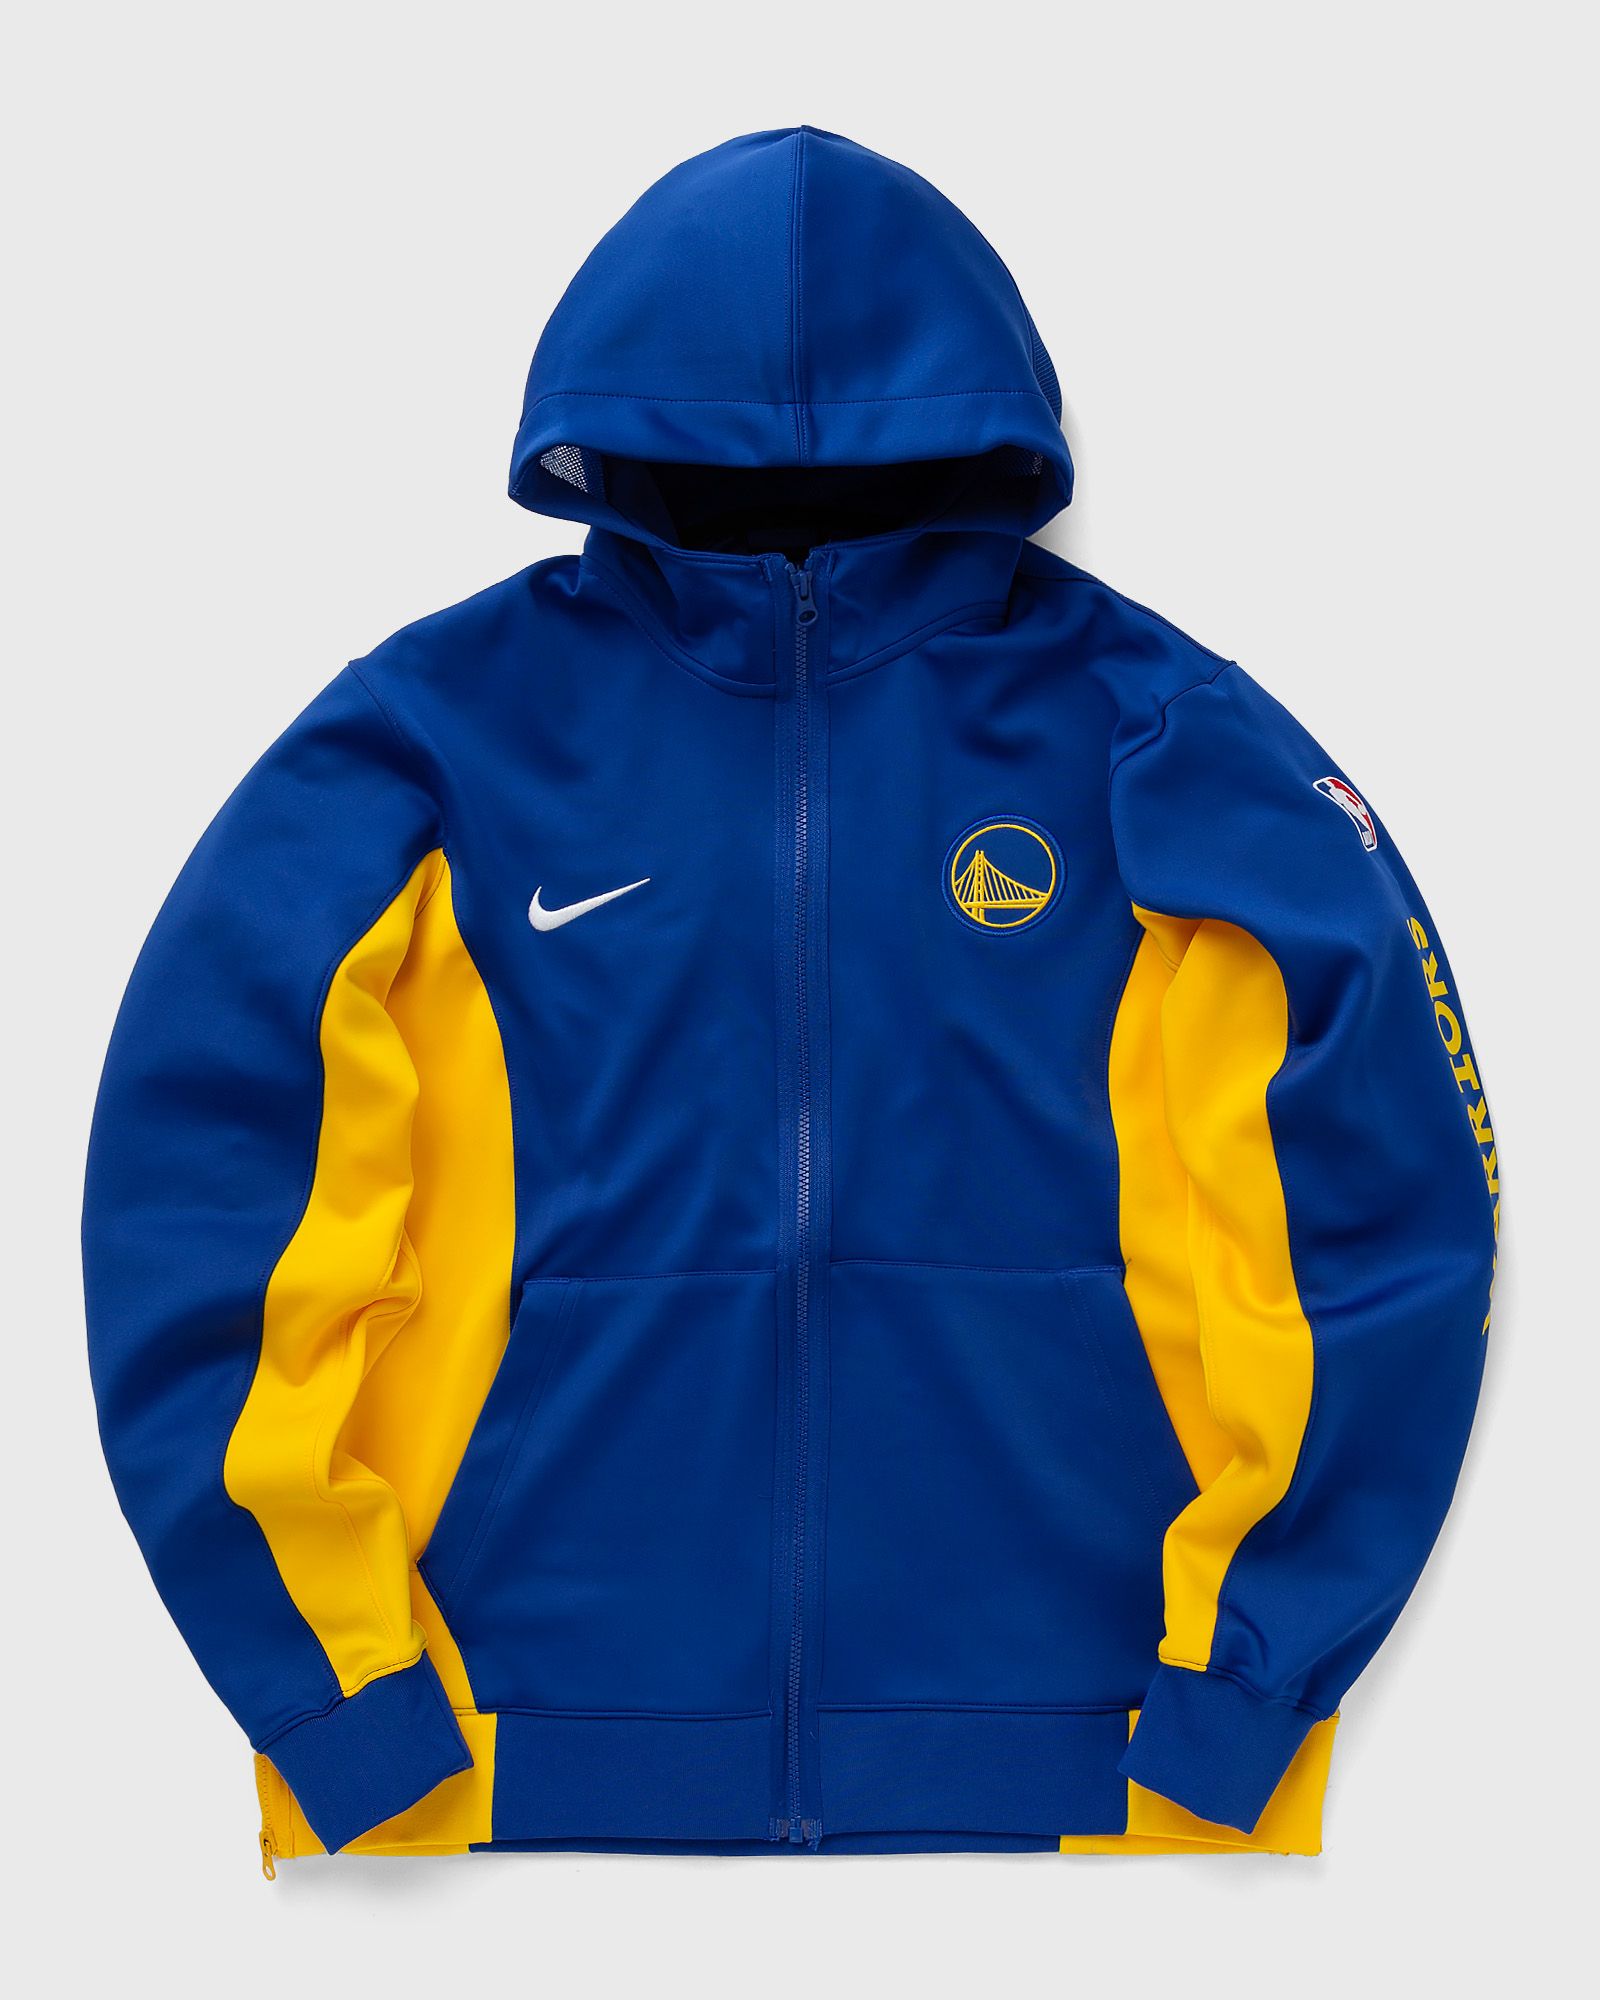 Nike - golden state warriors showtime men's  dri-fit nba full-zip hoodie men hoodies|team sweats|zippers blue in größe:xl